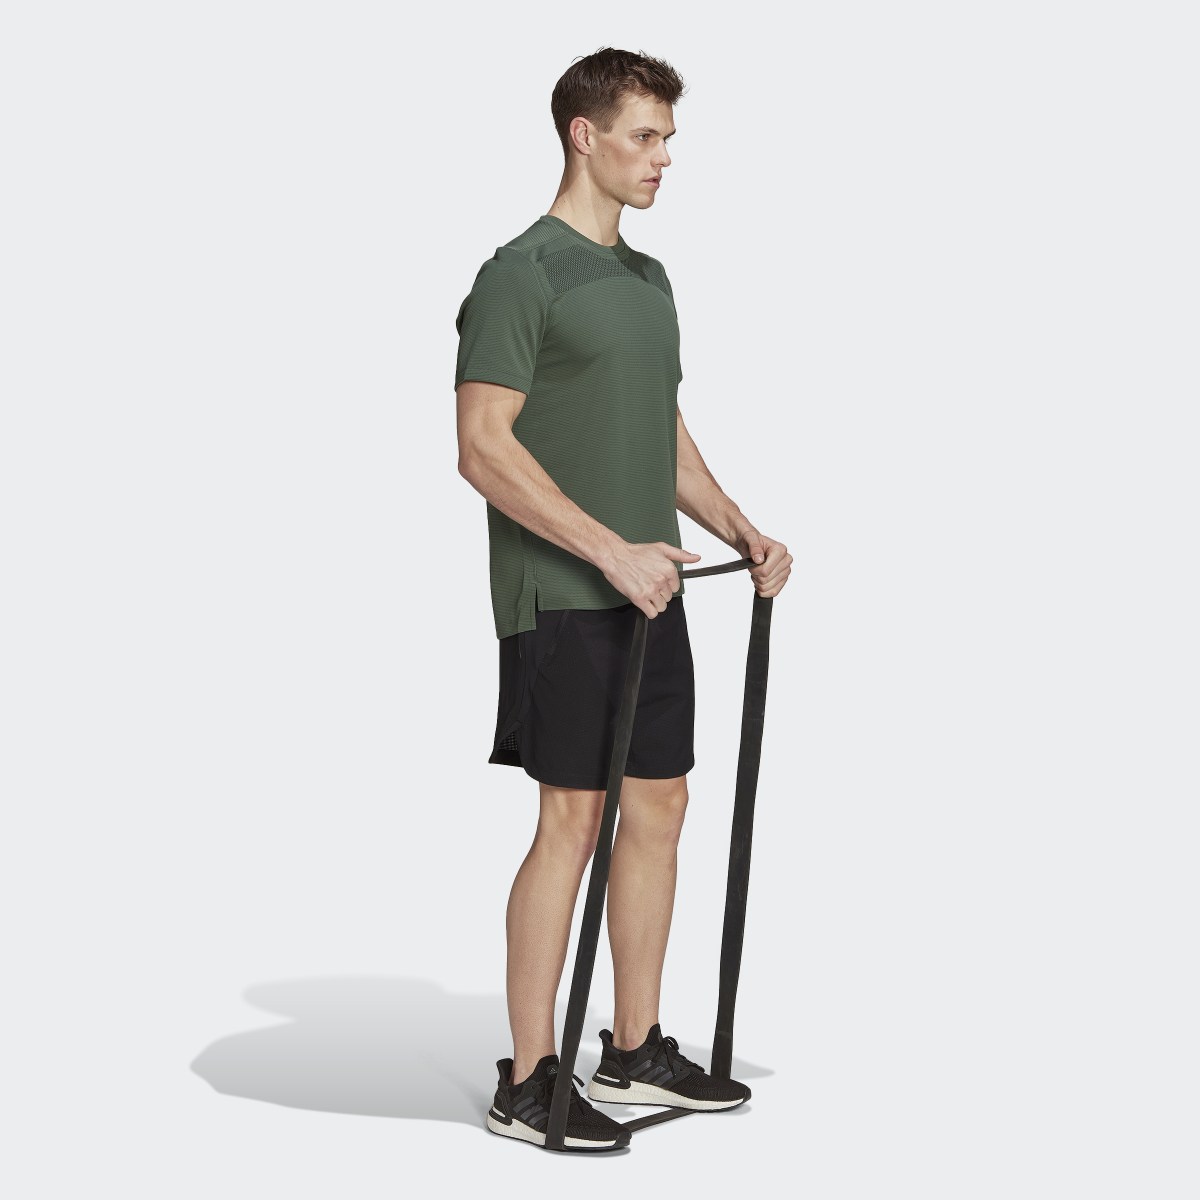 Adidas T-shirt Workout Front Rack Impact Print. 4